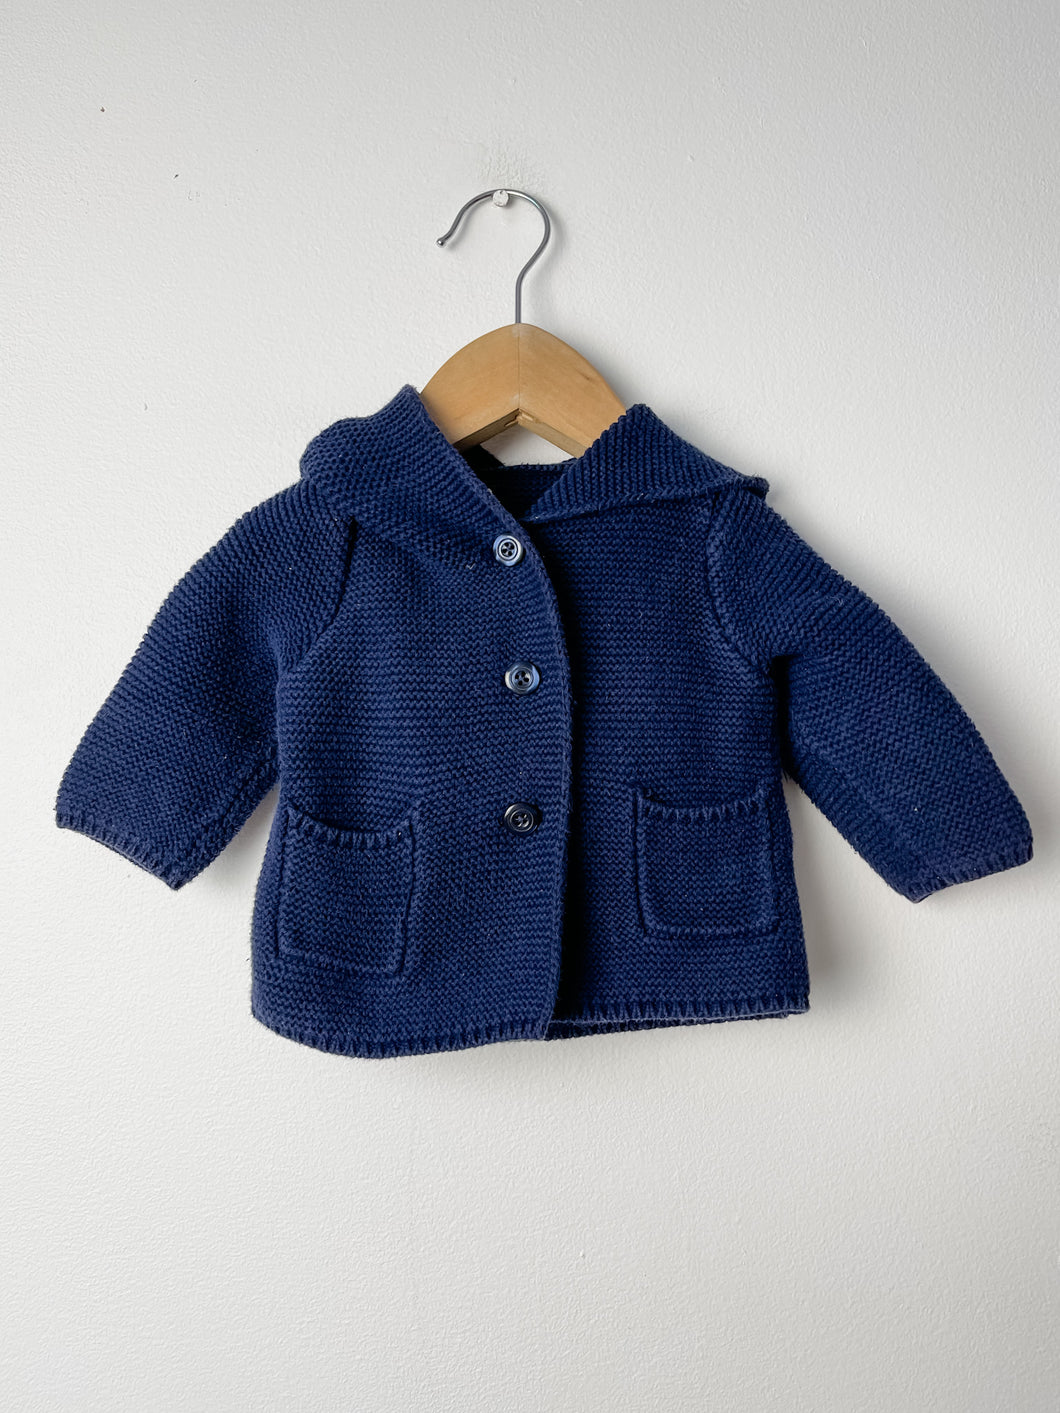 Blue Gap Knit Sweater Size 3-6 Months